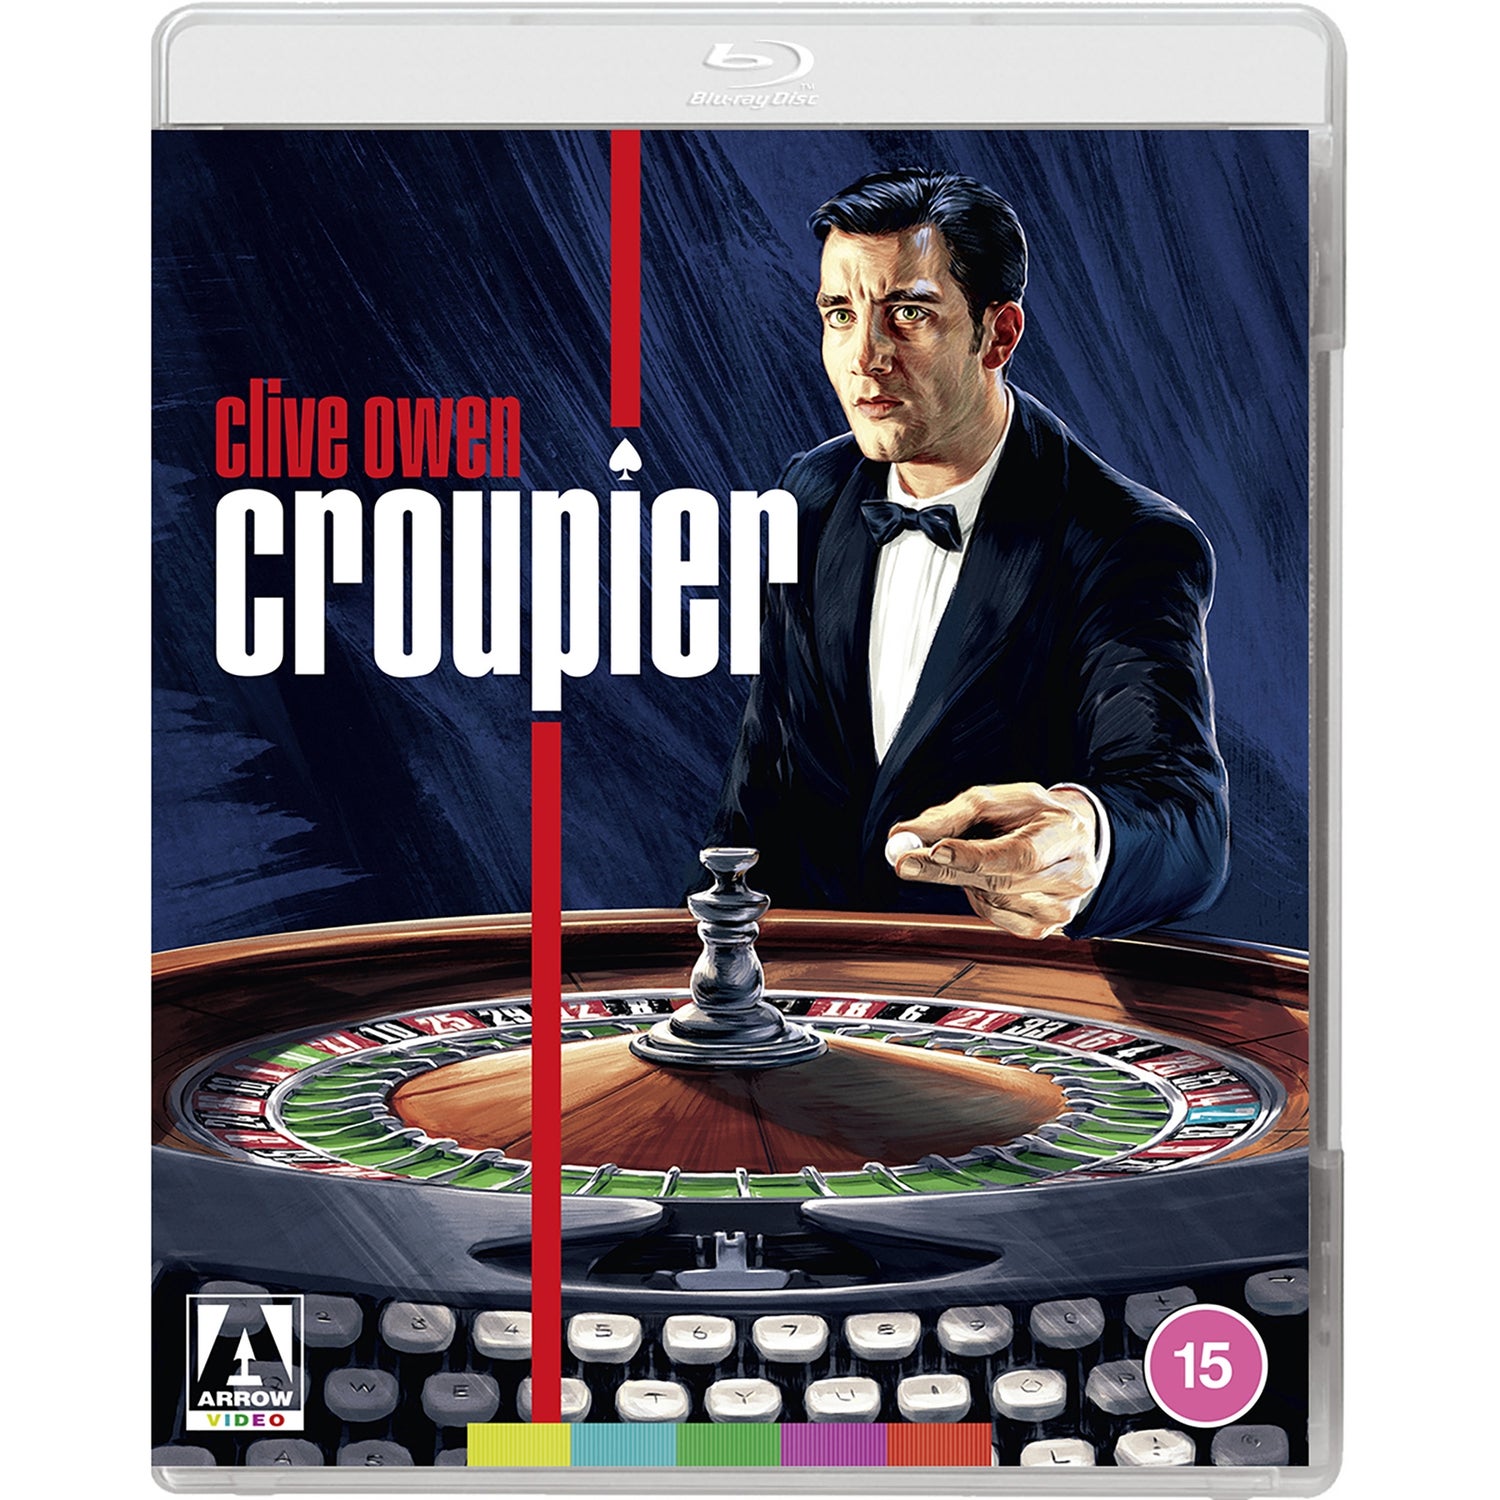 Croupier Blu-ray